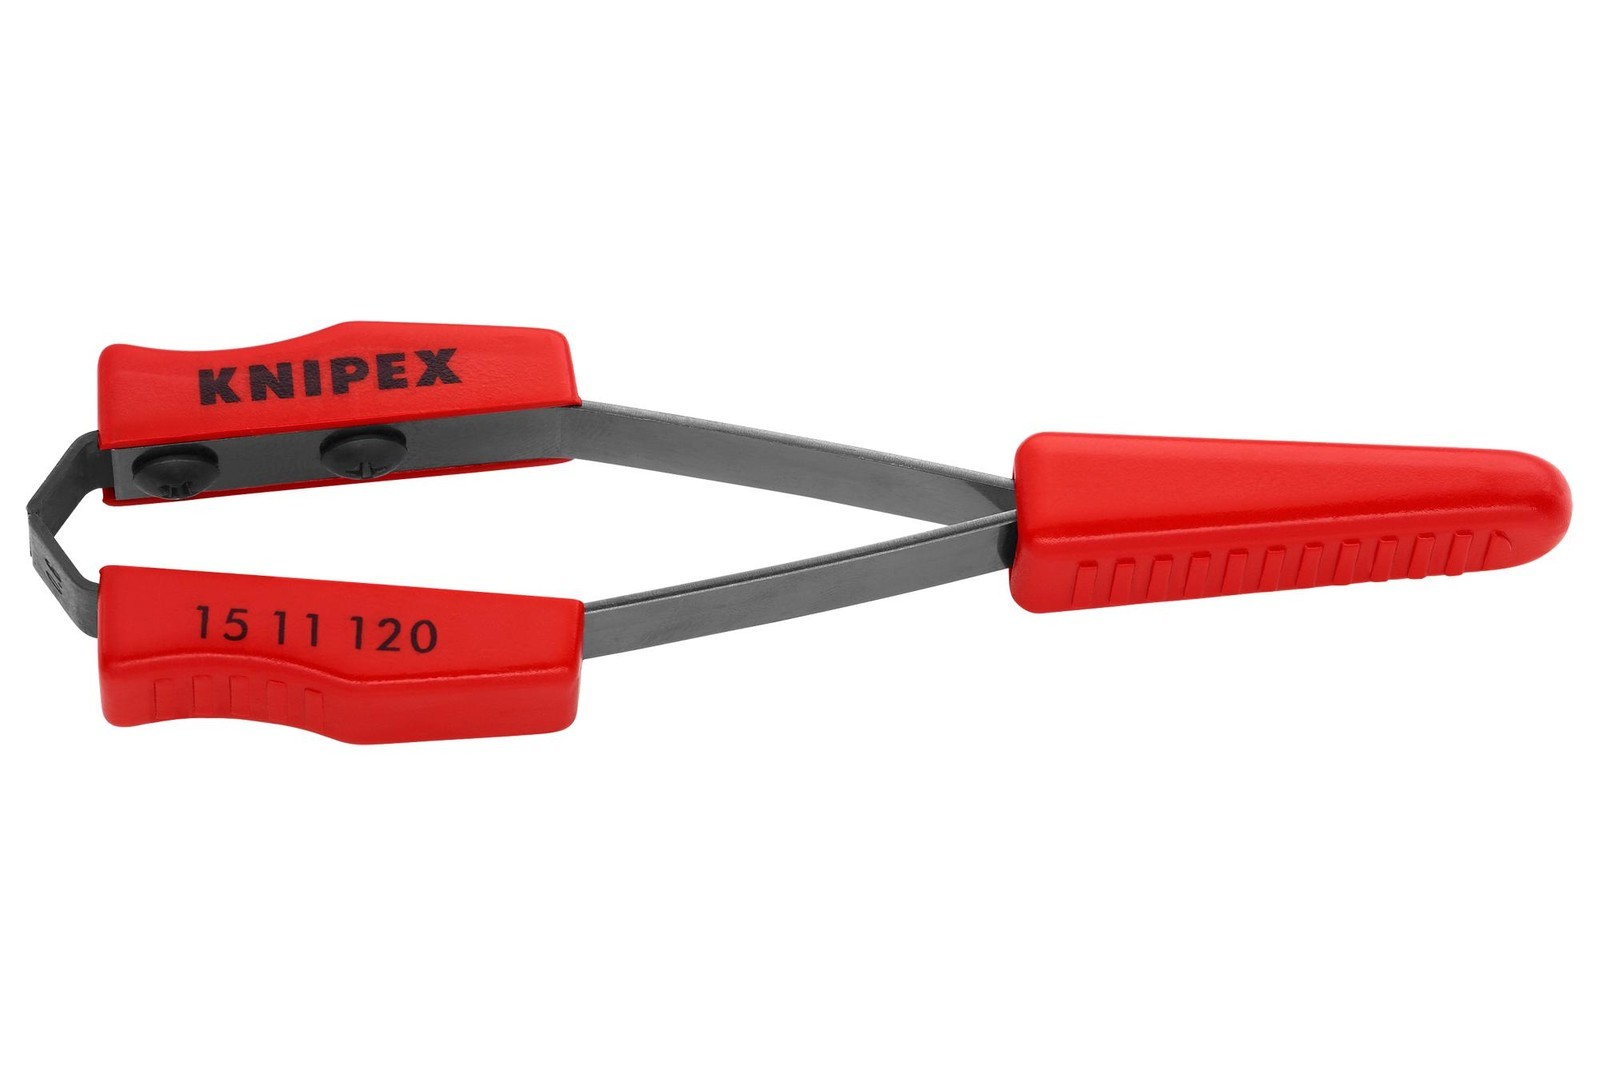 Knipex 15 11 120 Wire Stripper, 0.6mm